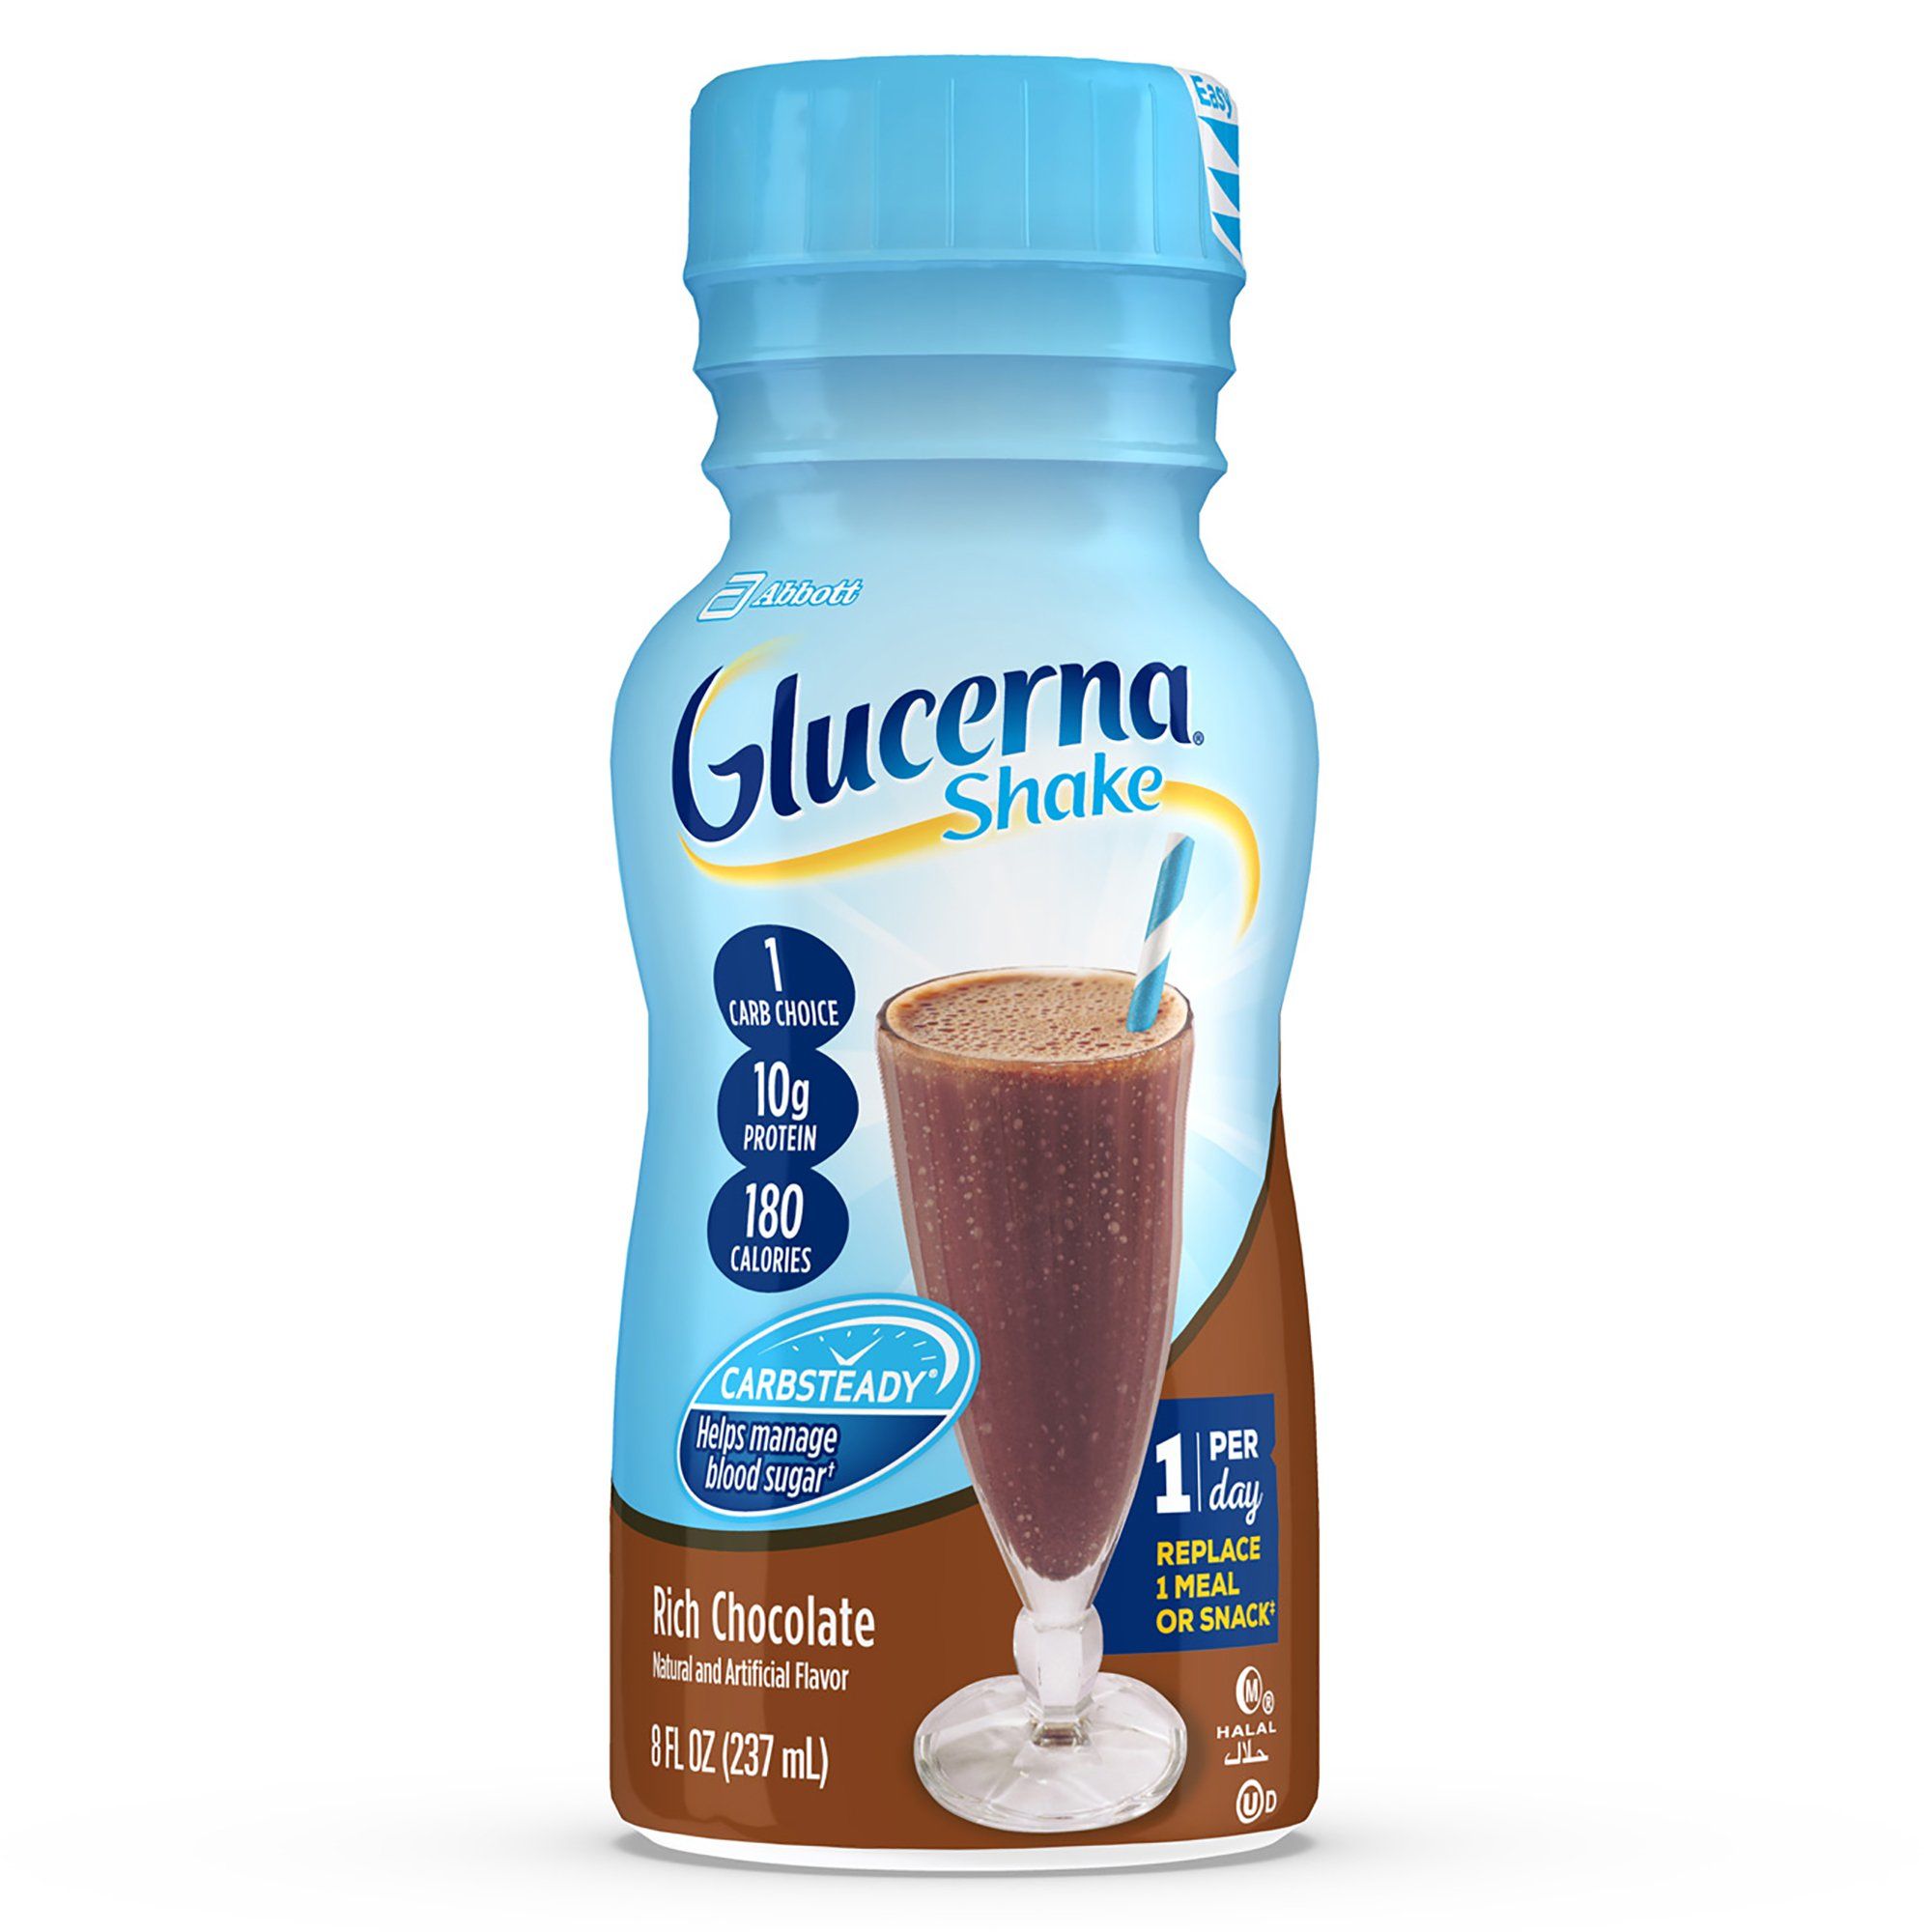 Glucerna Diabetic Protein Shake, Rich Chocolate, 8 fl oz - 6 ct